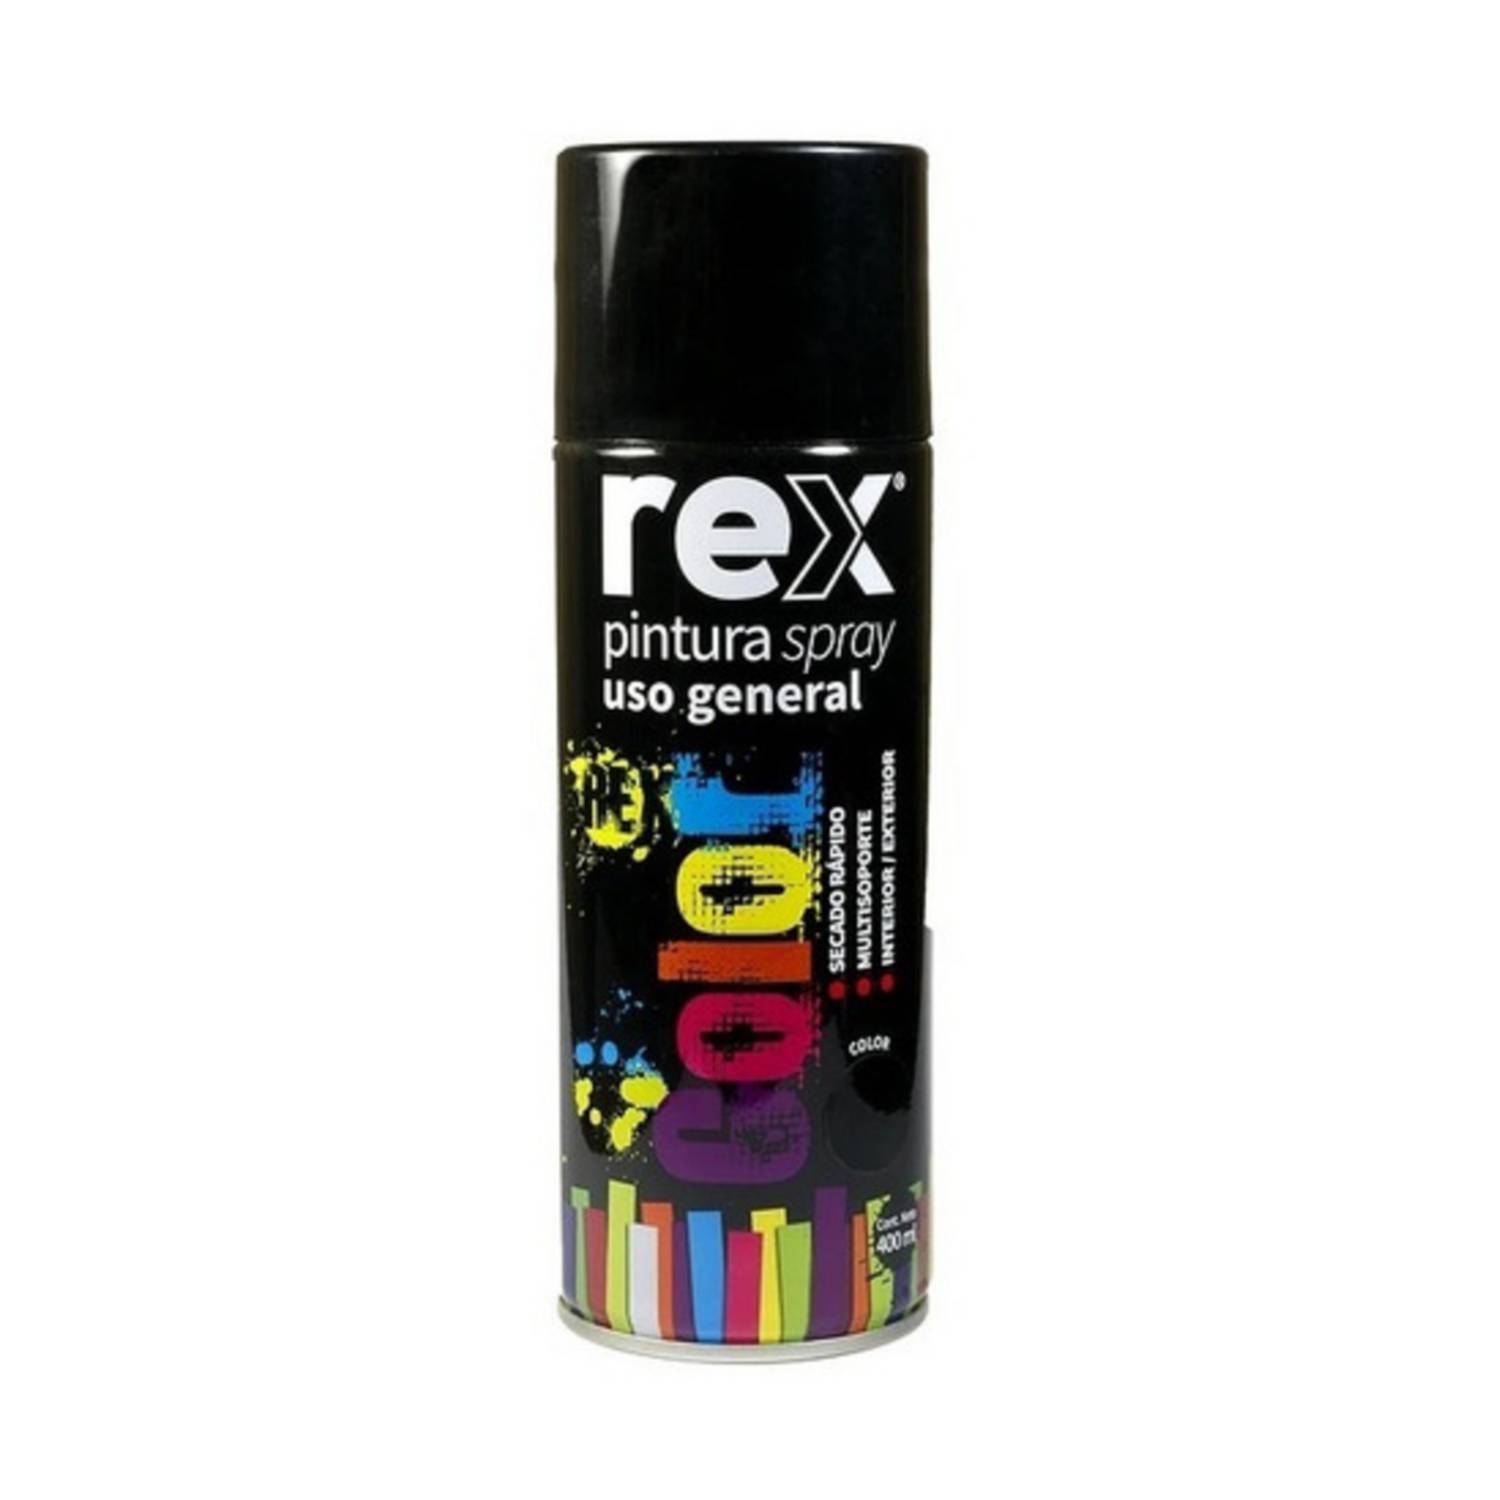 Pintura Spray Rex Fluor